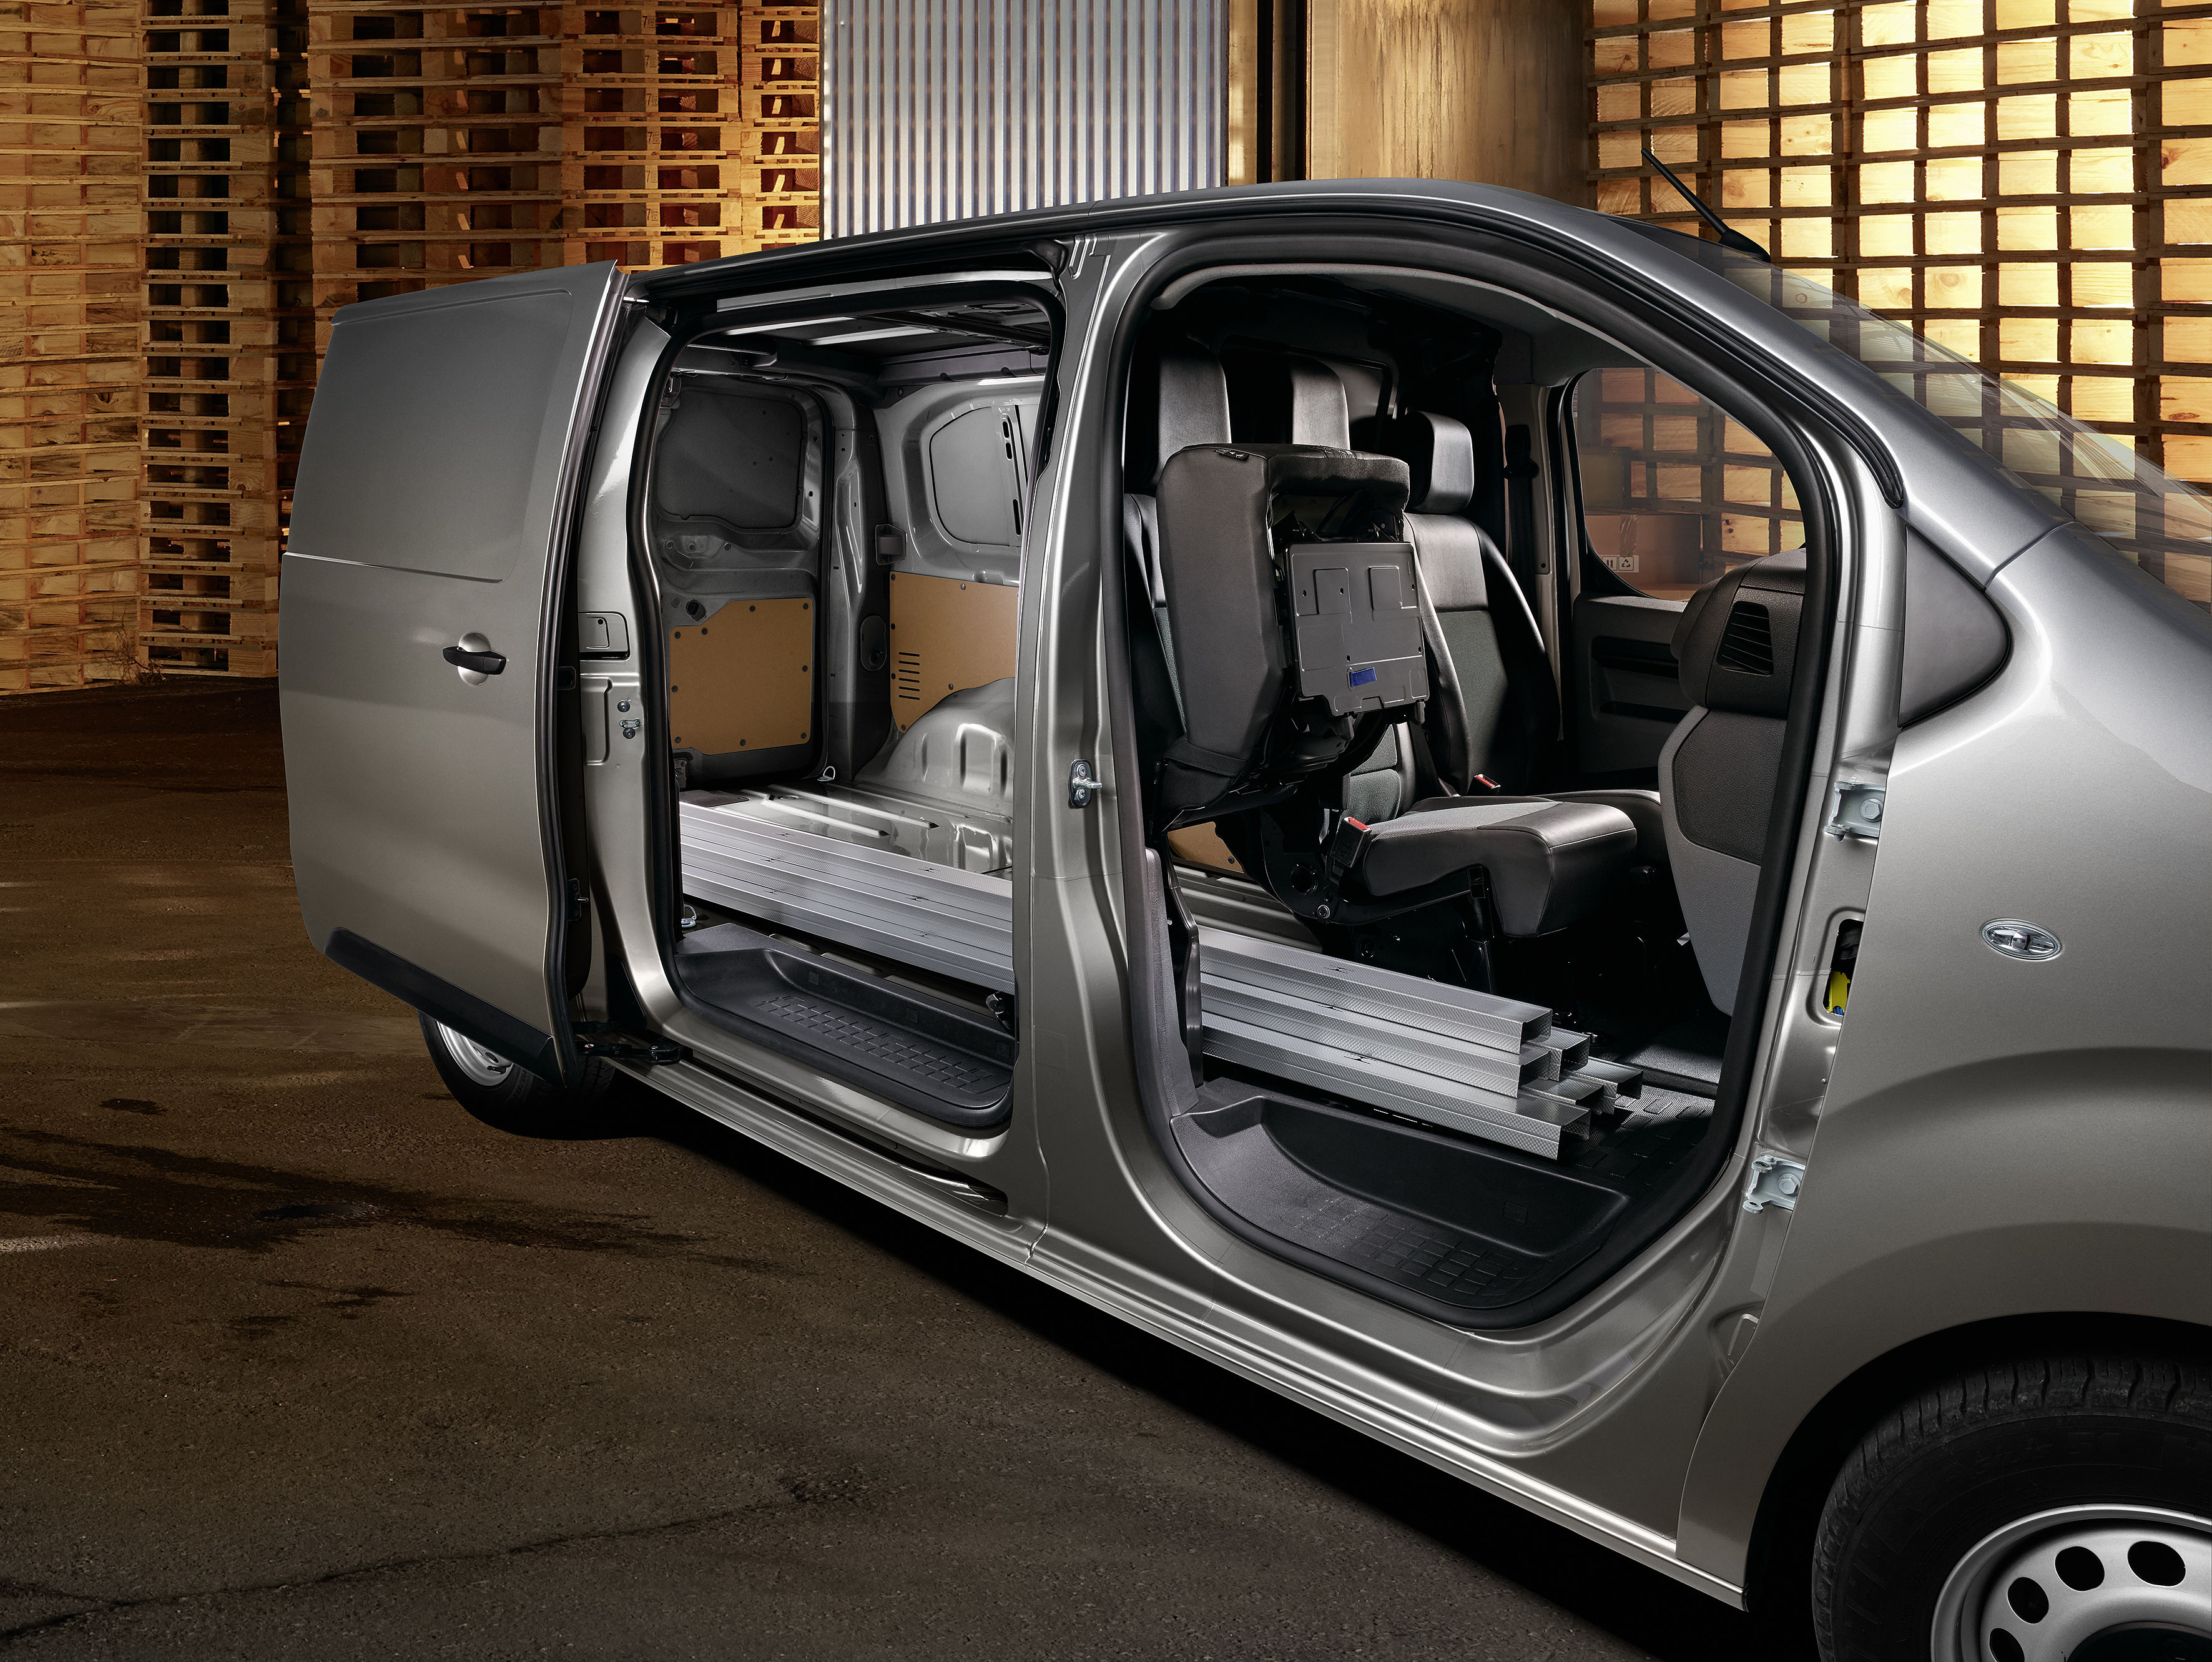 Opel Vivaro mod specifications